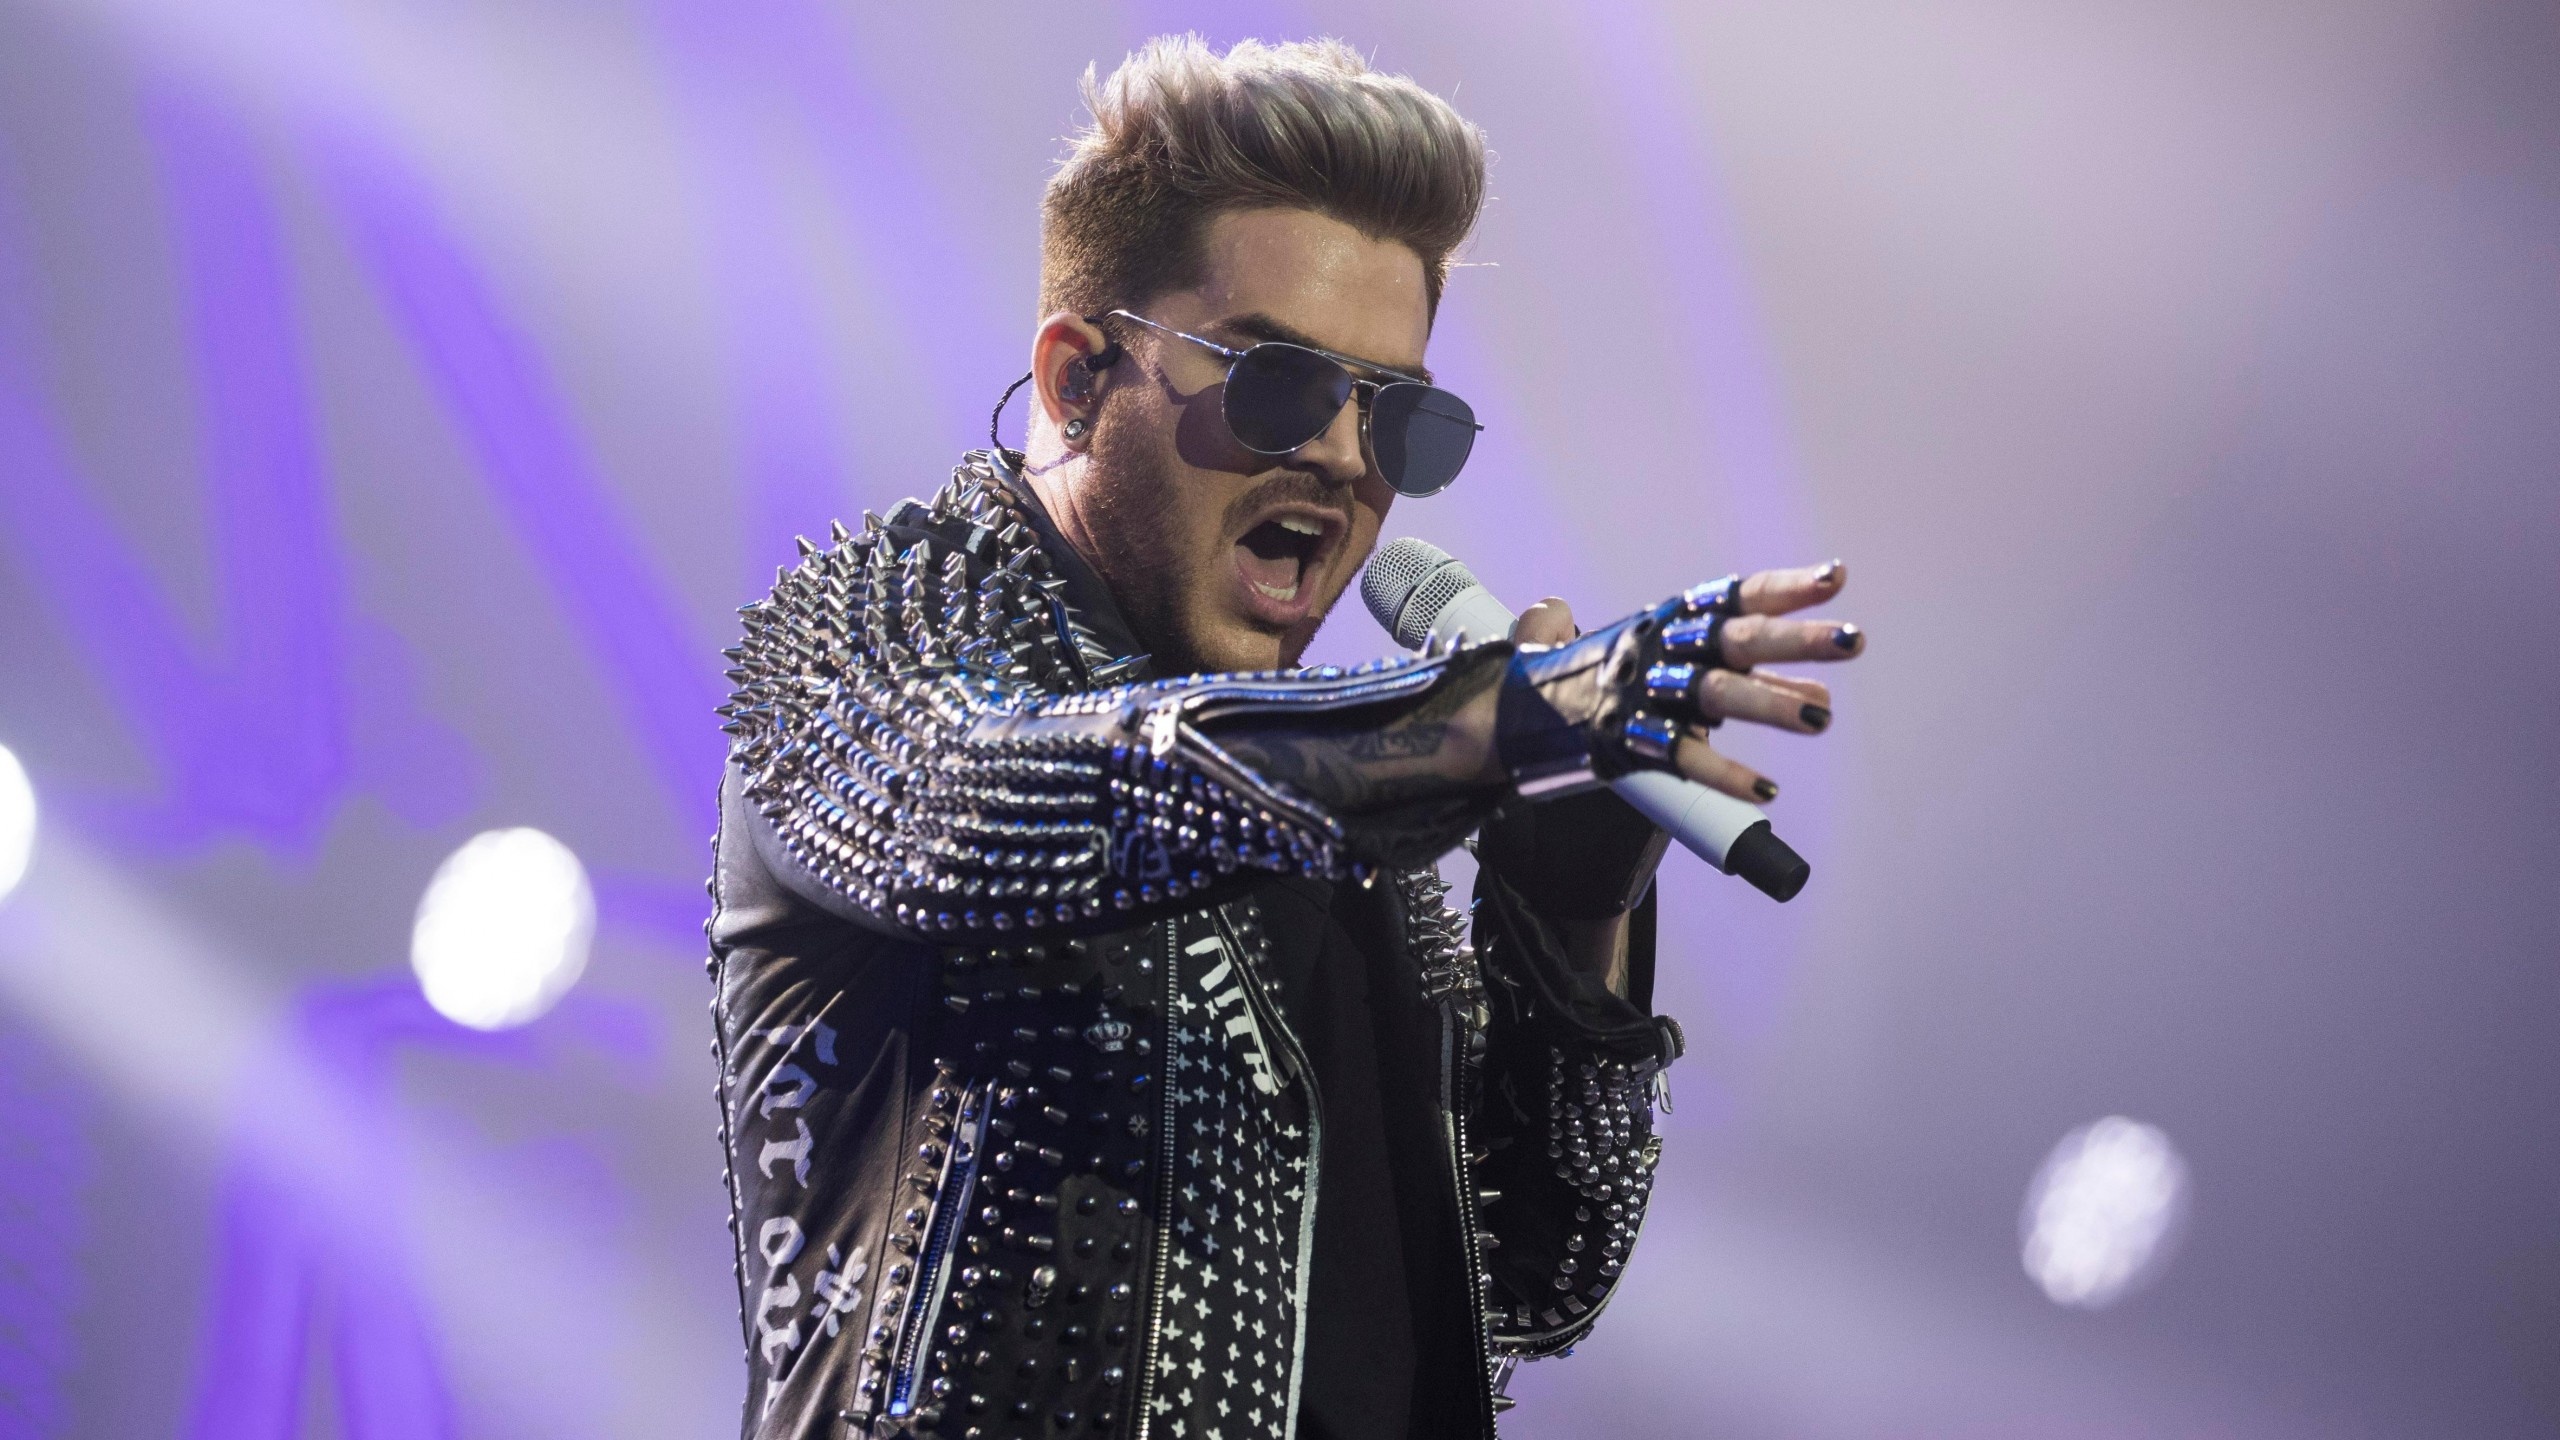 Adam Lambert: Released his second studio album Trespassing in 2012. 2560x1440 HD Background.